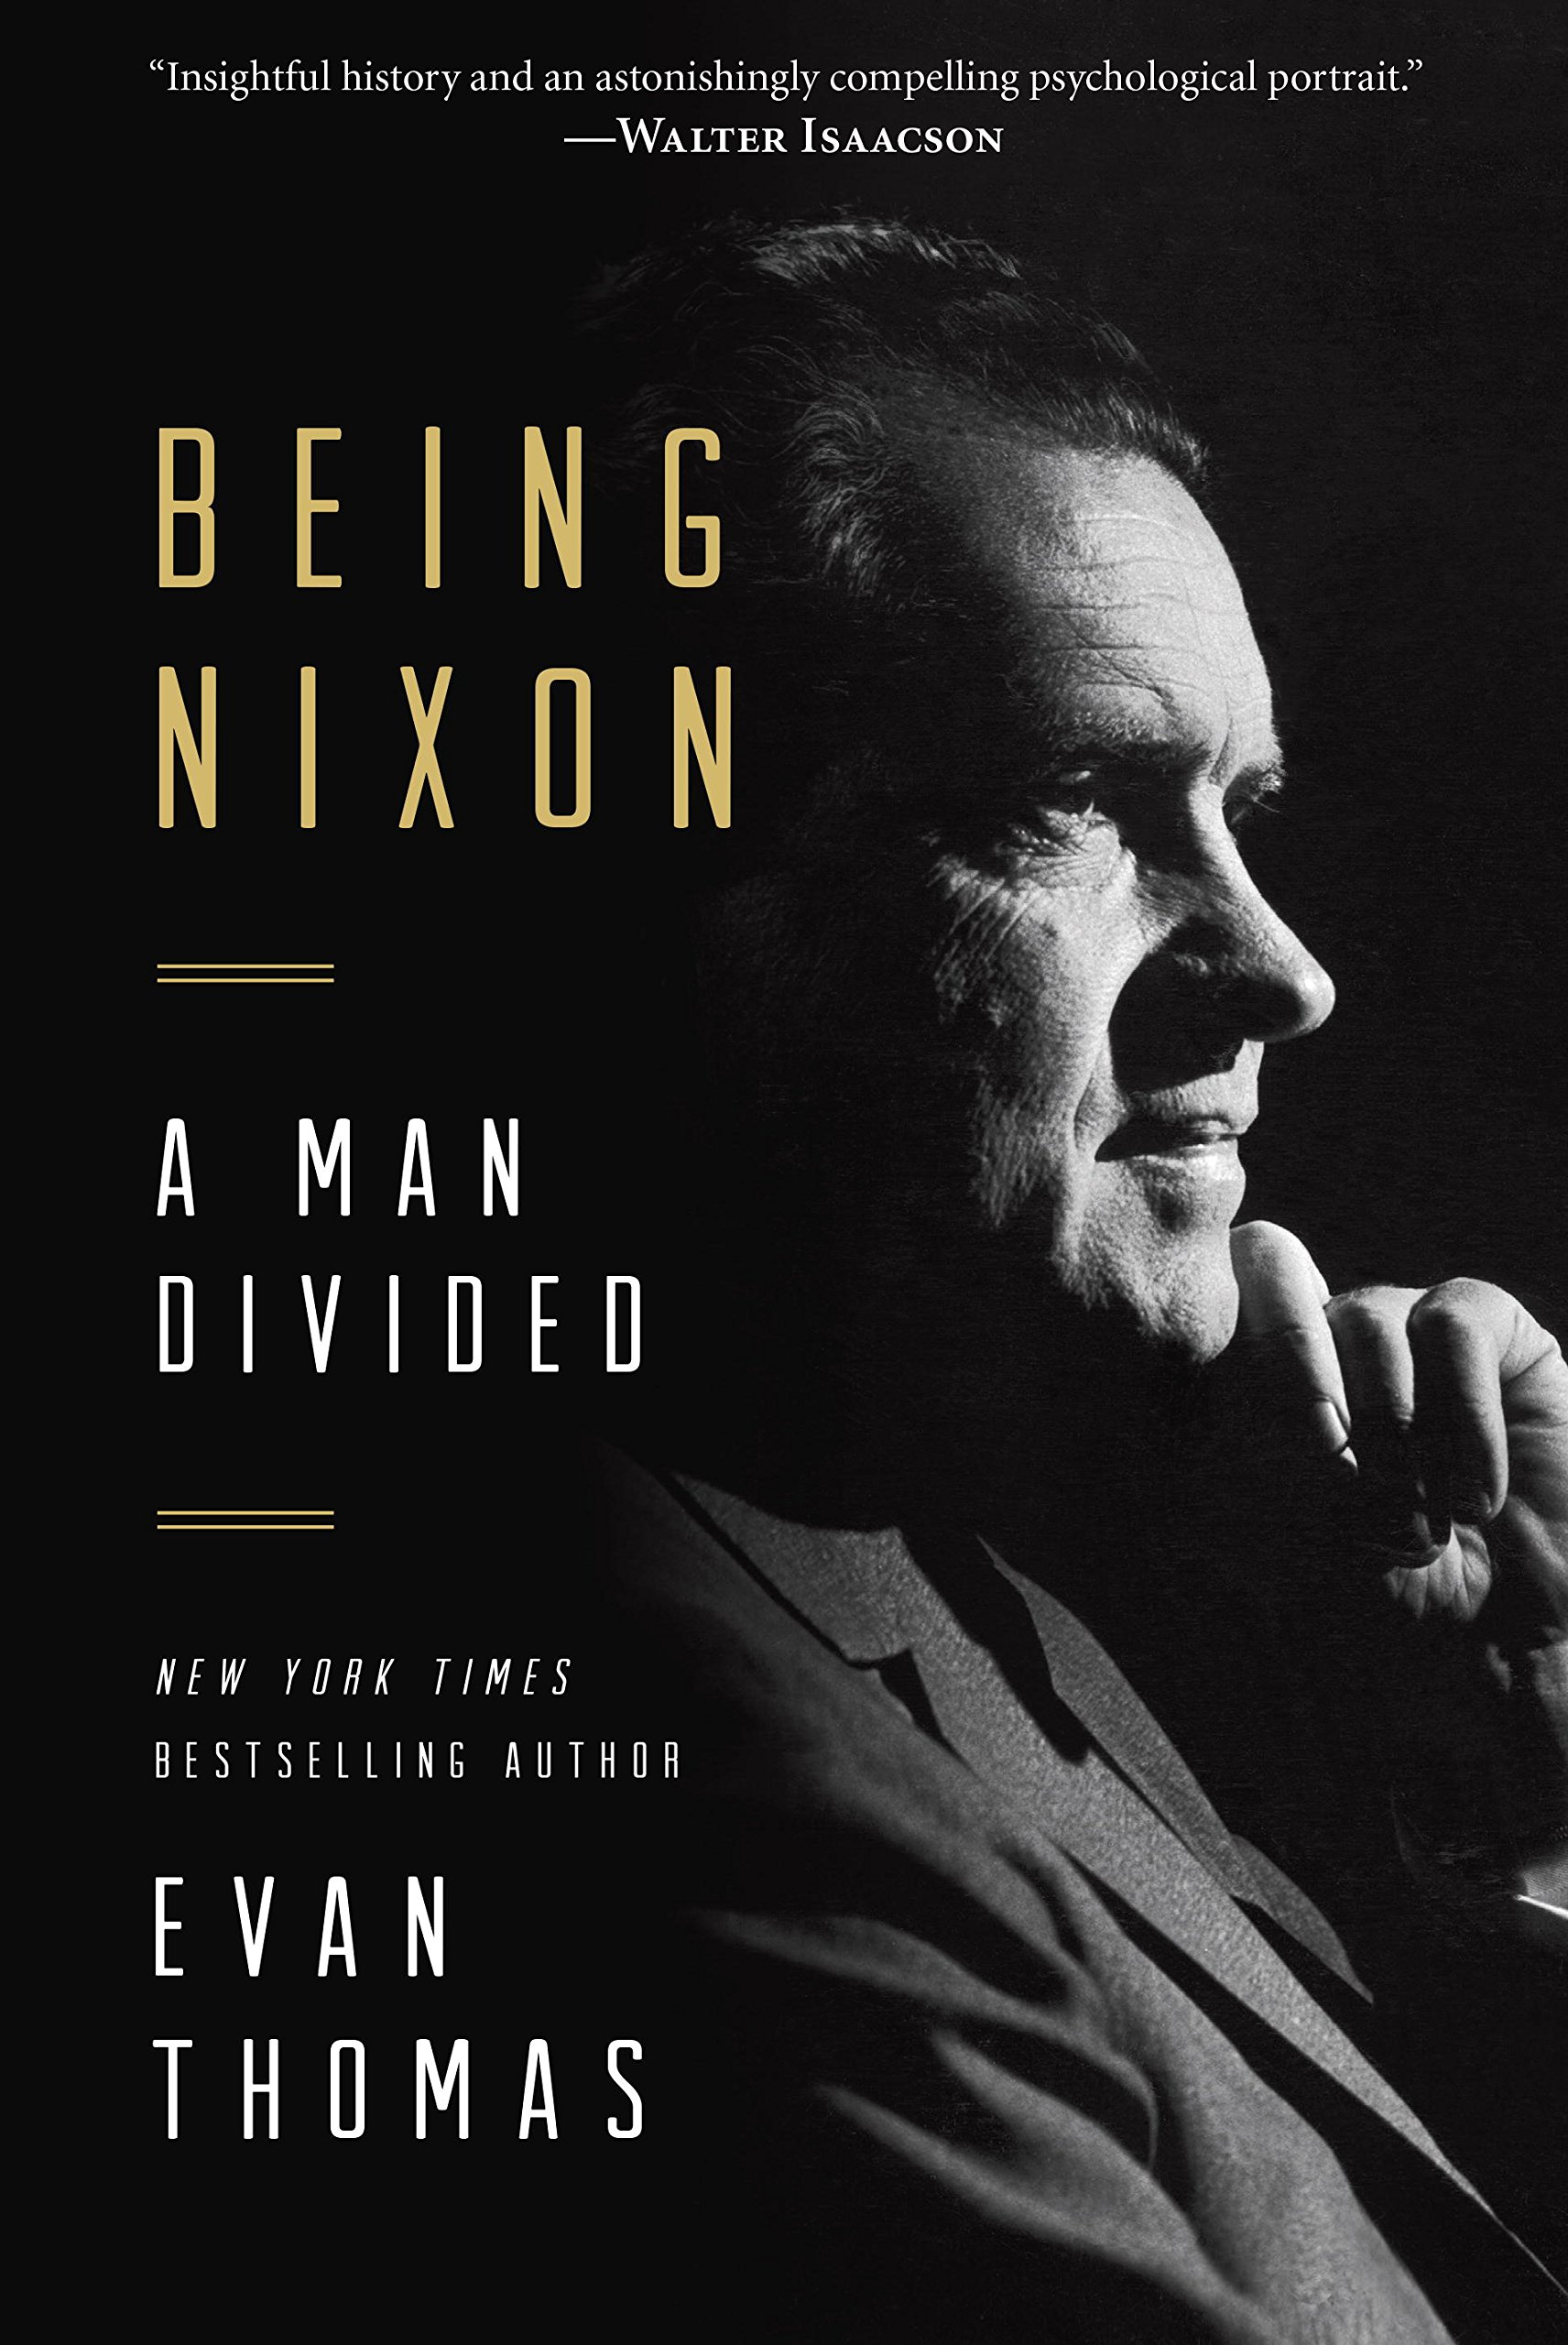 Top 10 Non Fiction Being Nixon by Evan Thomas